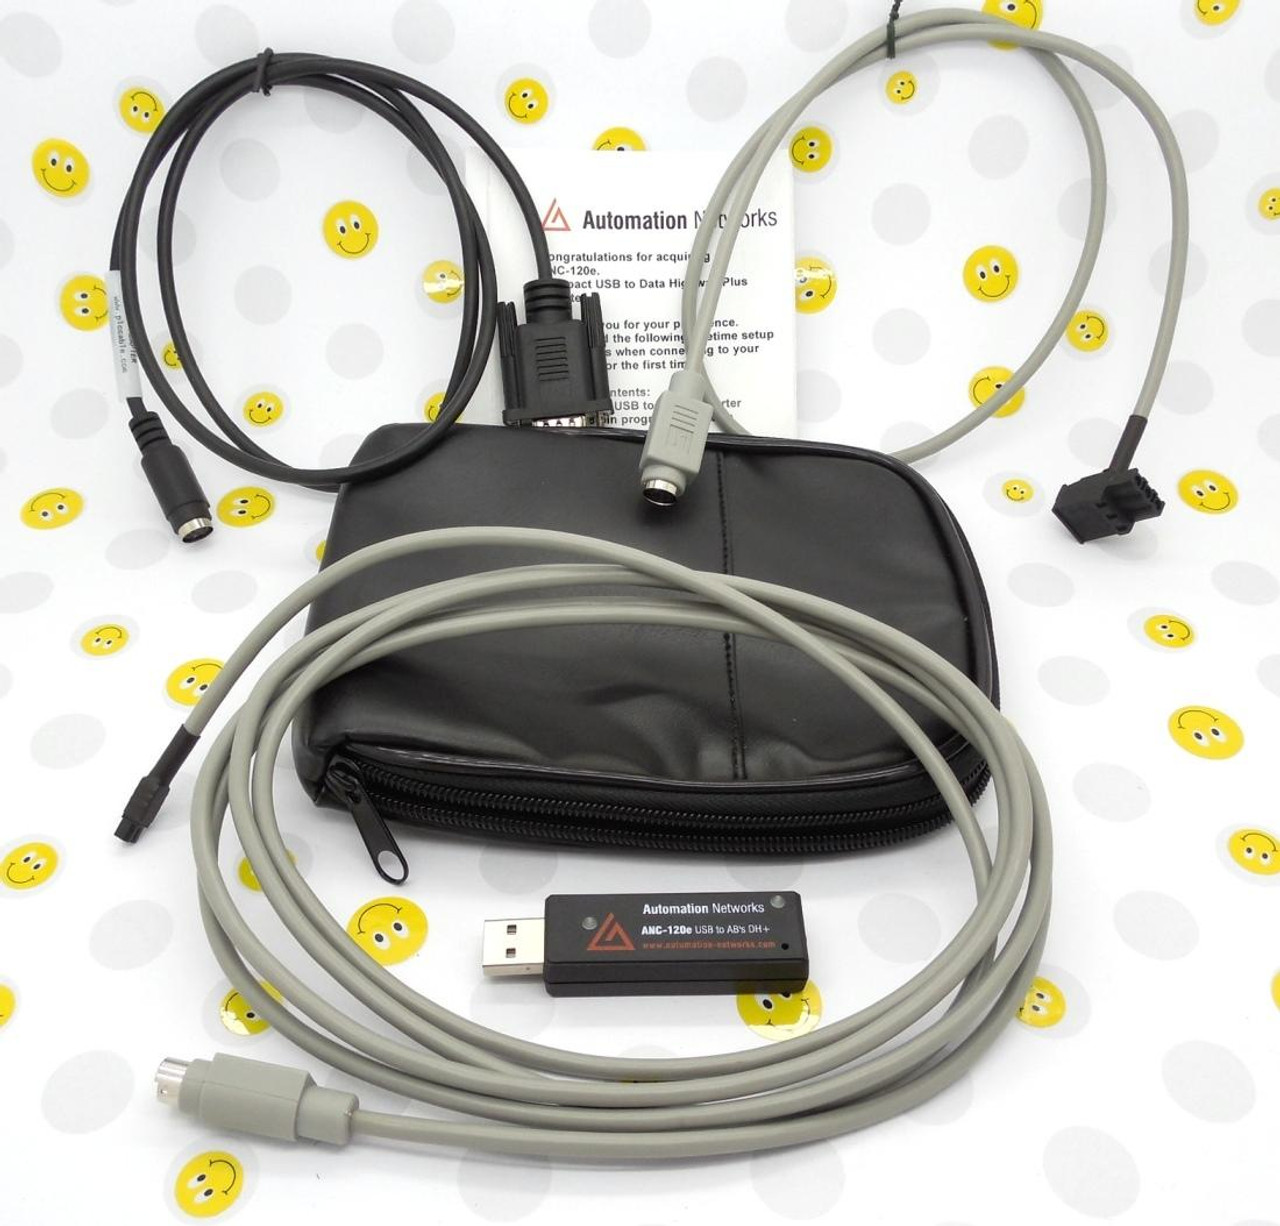 Automation-Networks Allen Bradley 1784-U2DHP Alternative USB to Data Highway Plus DH ANC-120e